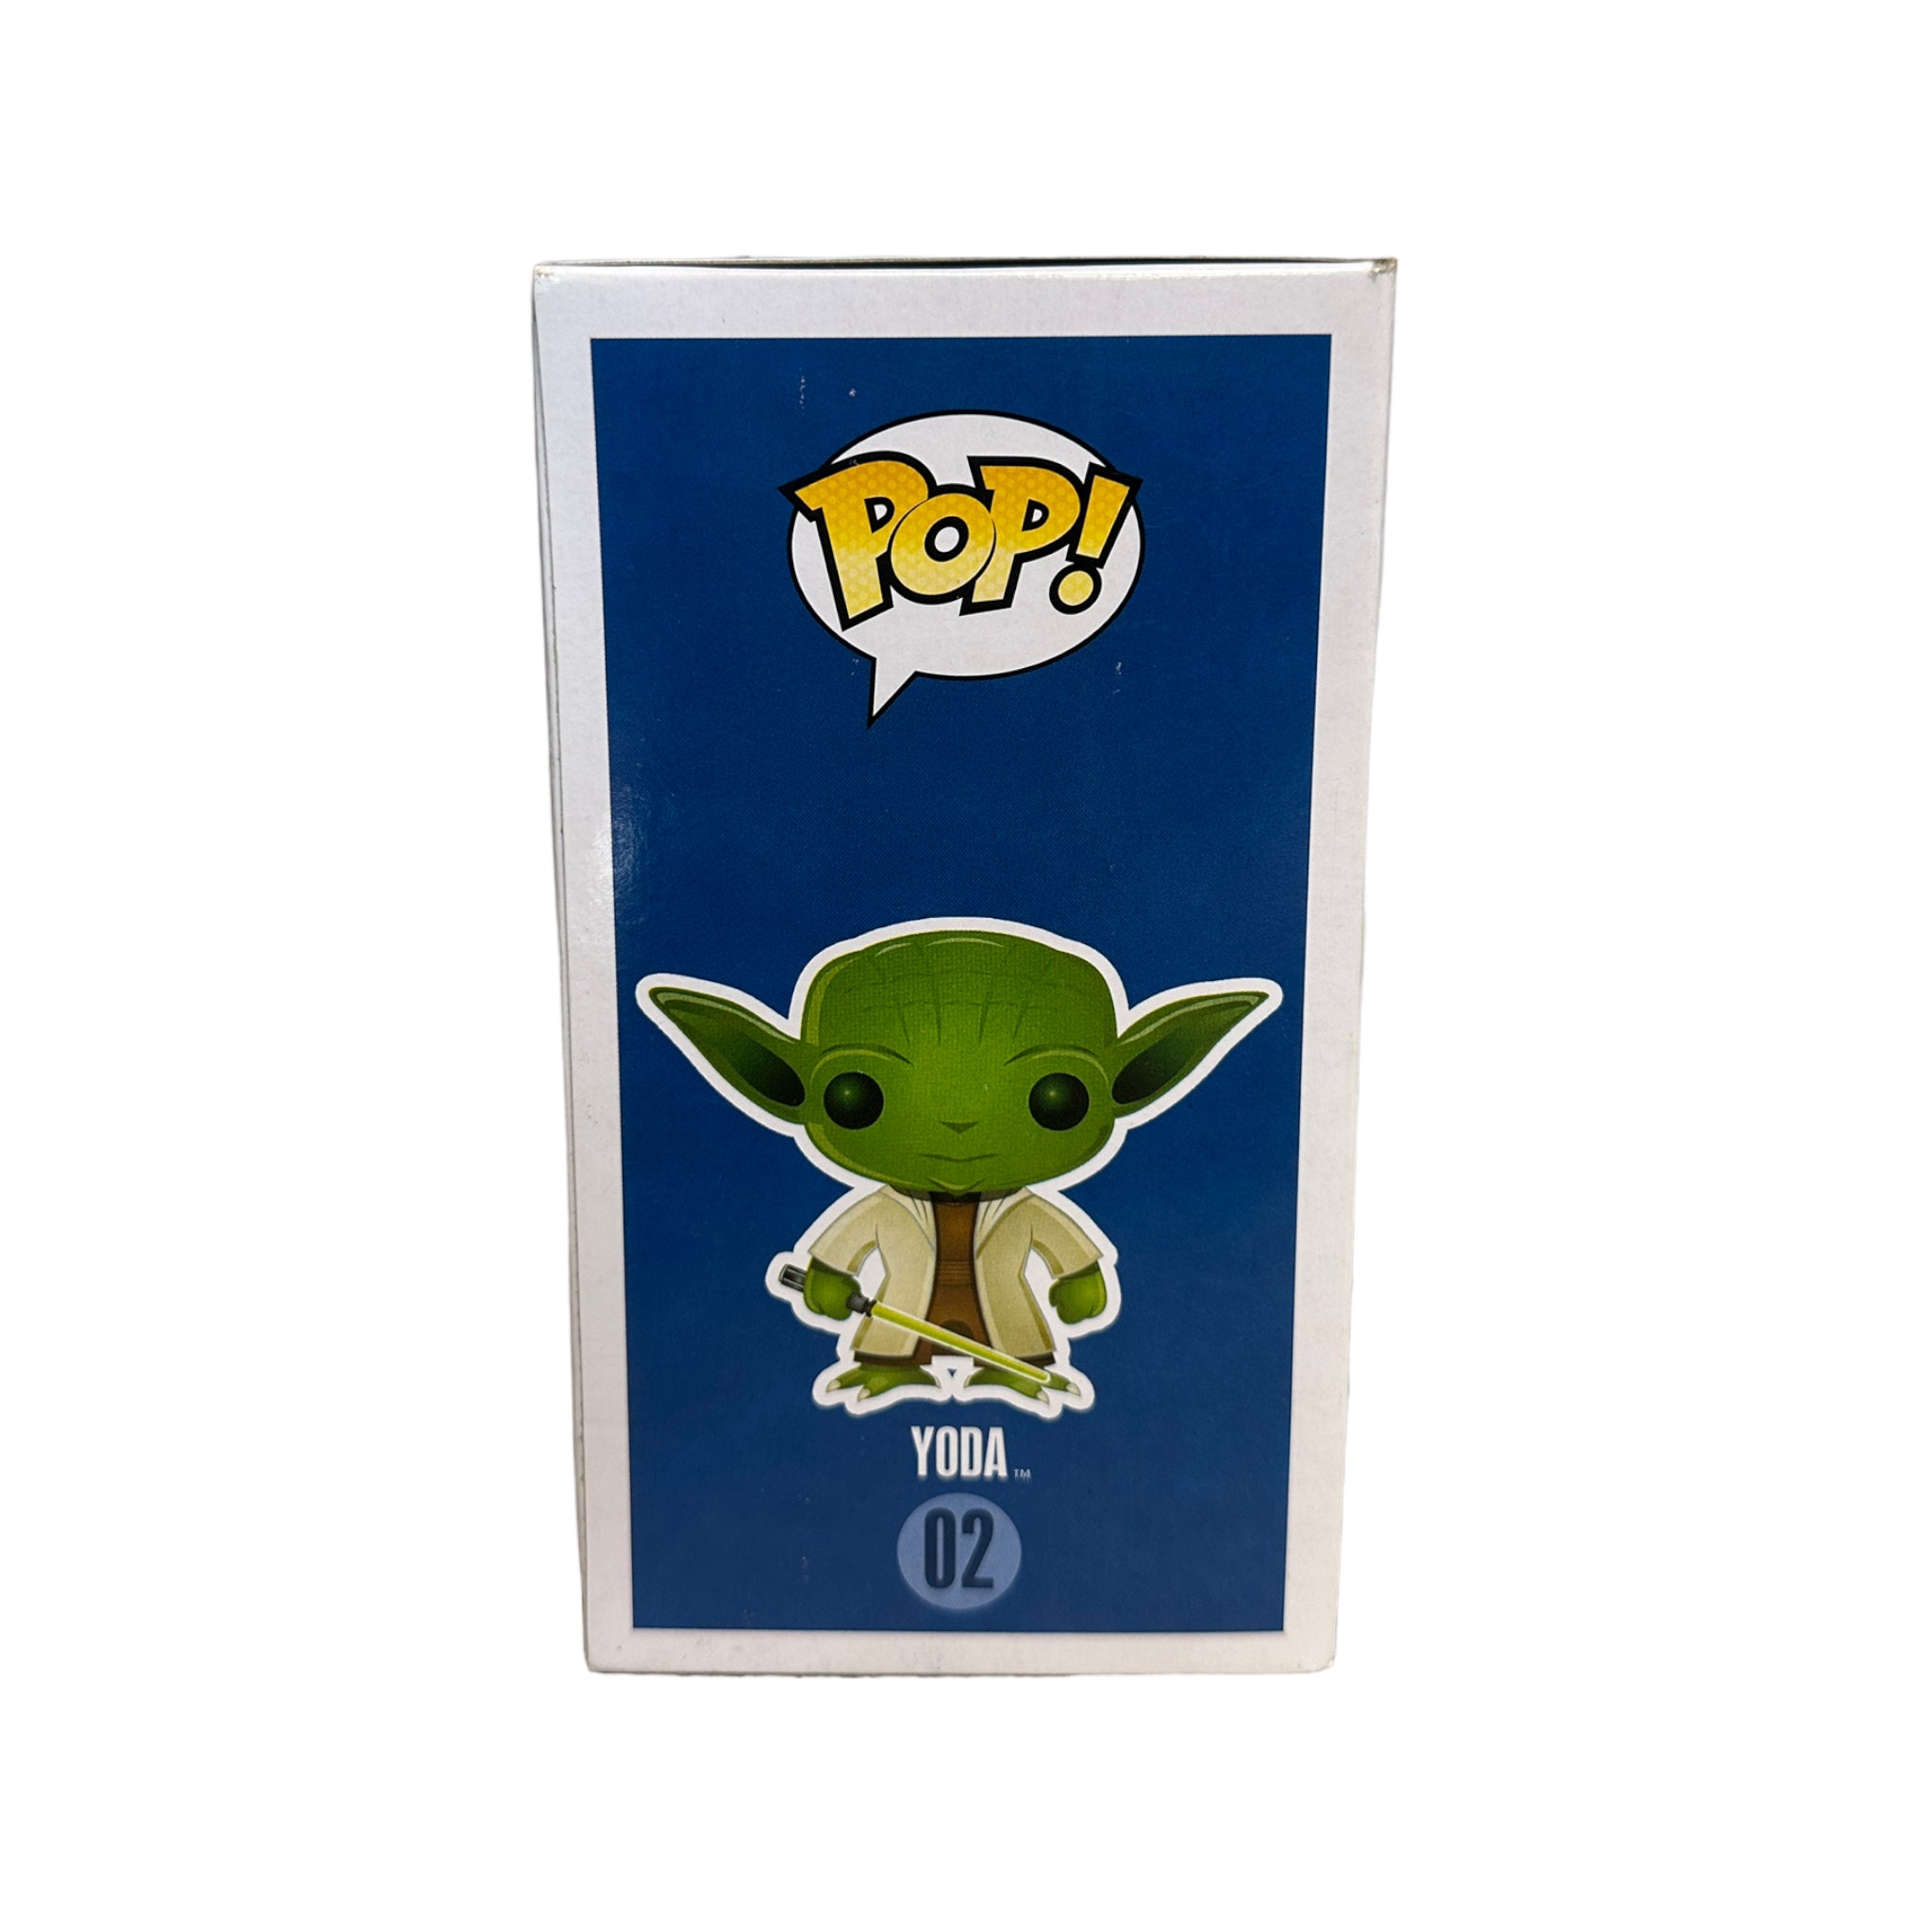 Yoda #02 (Large Writing) Funko Pop! - Star Wars - 2011 Pop! - Condition 7.5/10